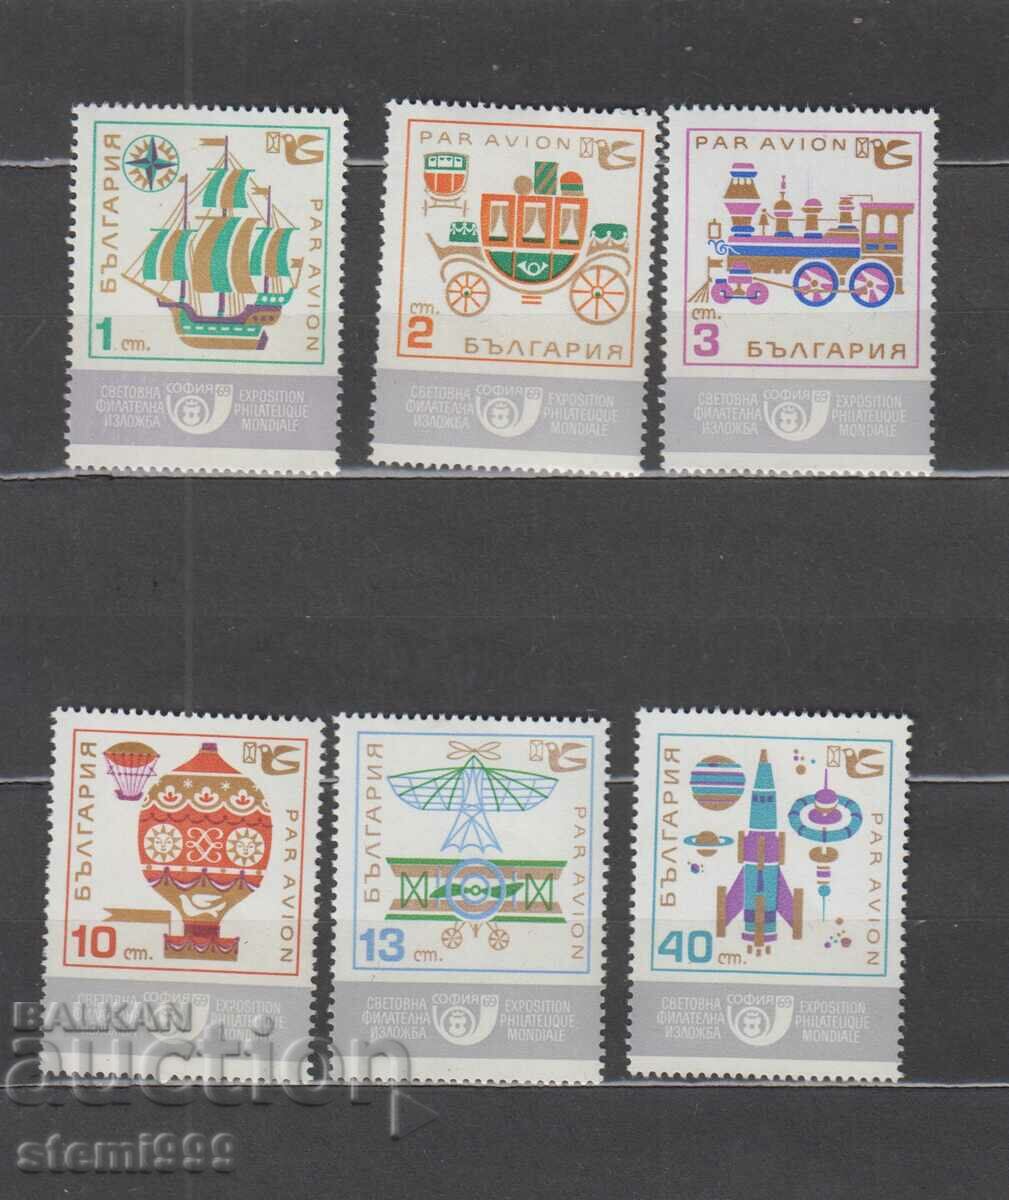 Postage stamps Communication media